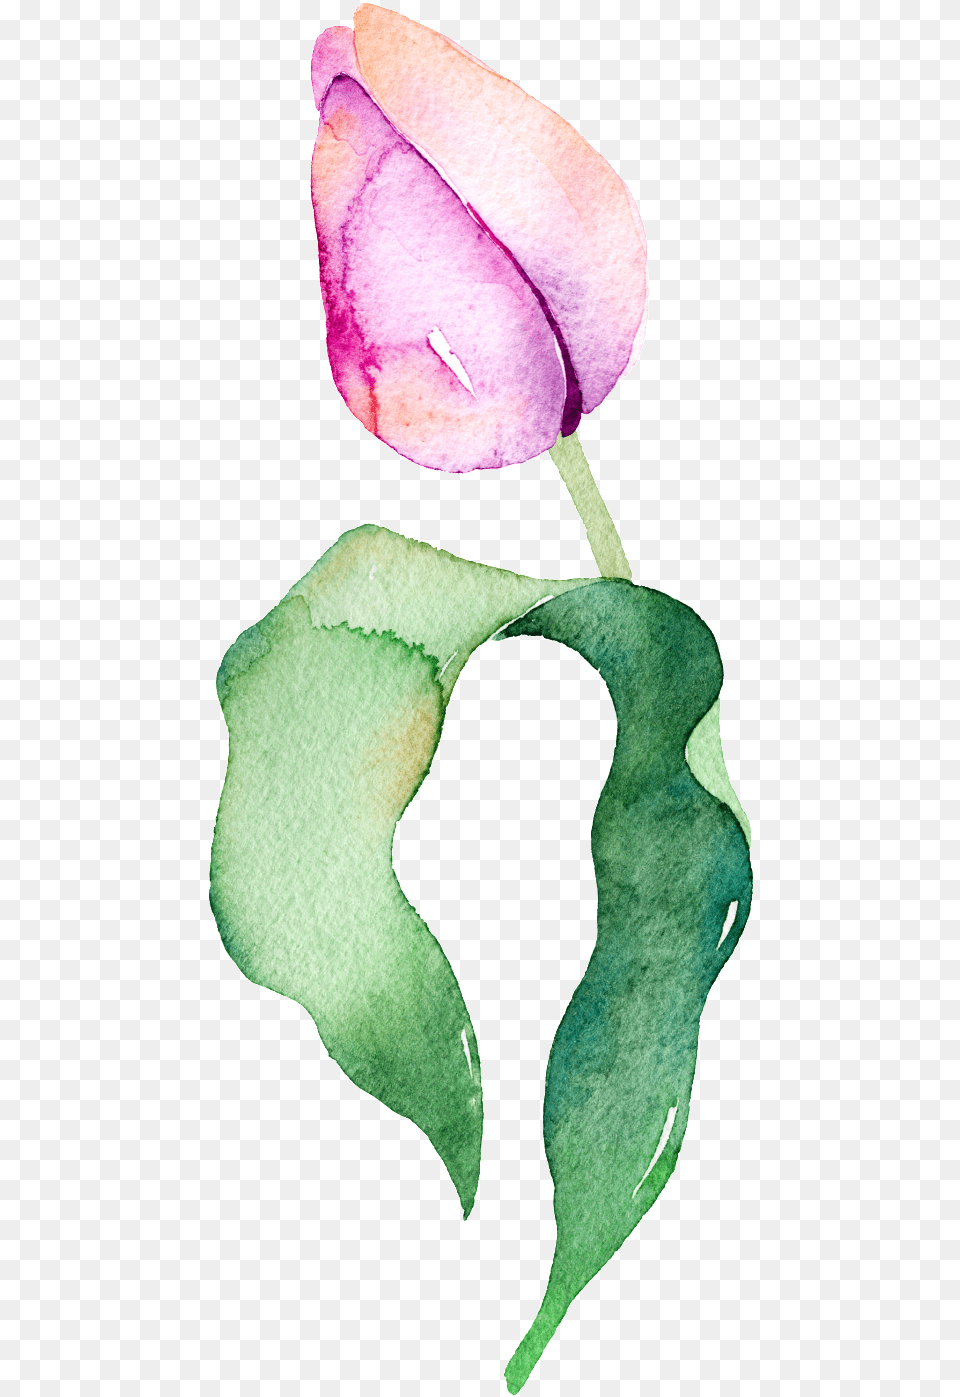 Purplish Tulip Transparent Decorative Material Flower, Bud, Petal, Plant, Sprout Png